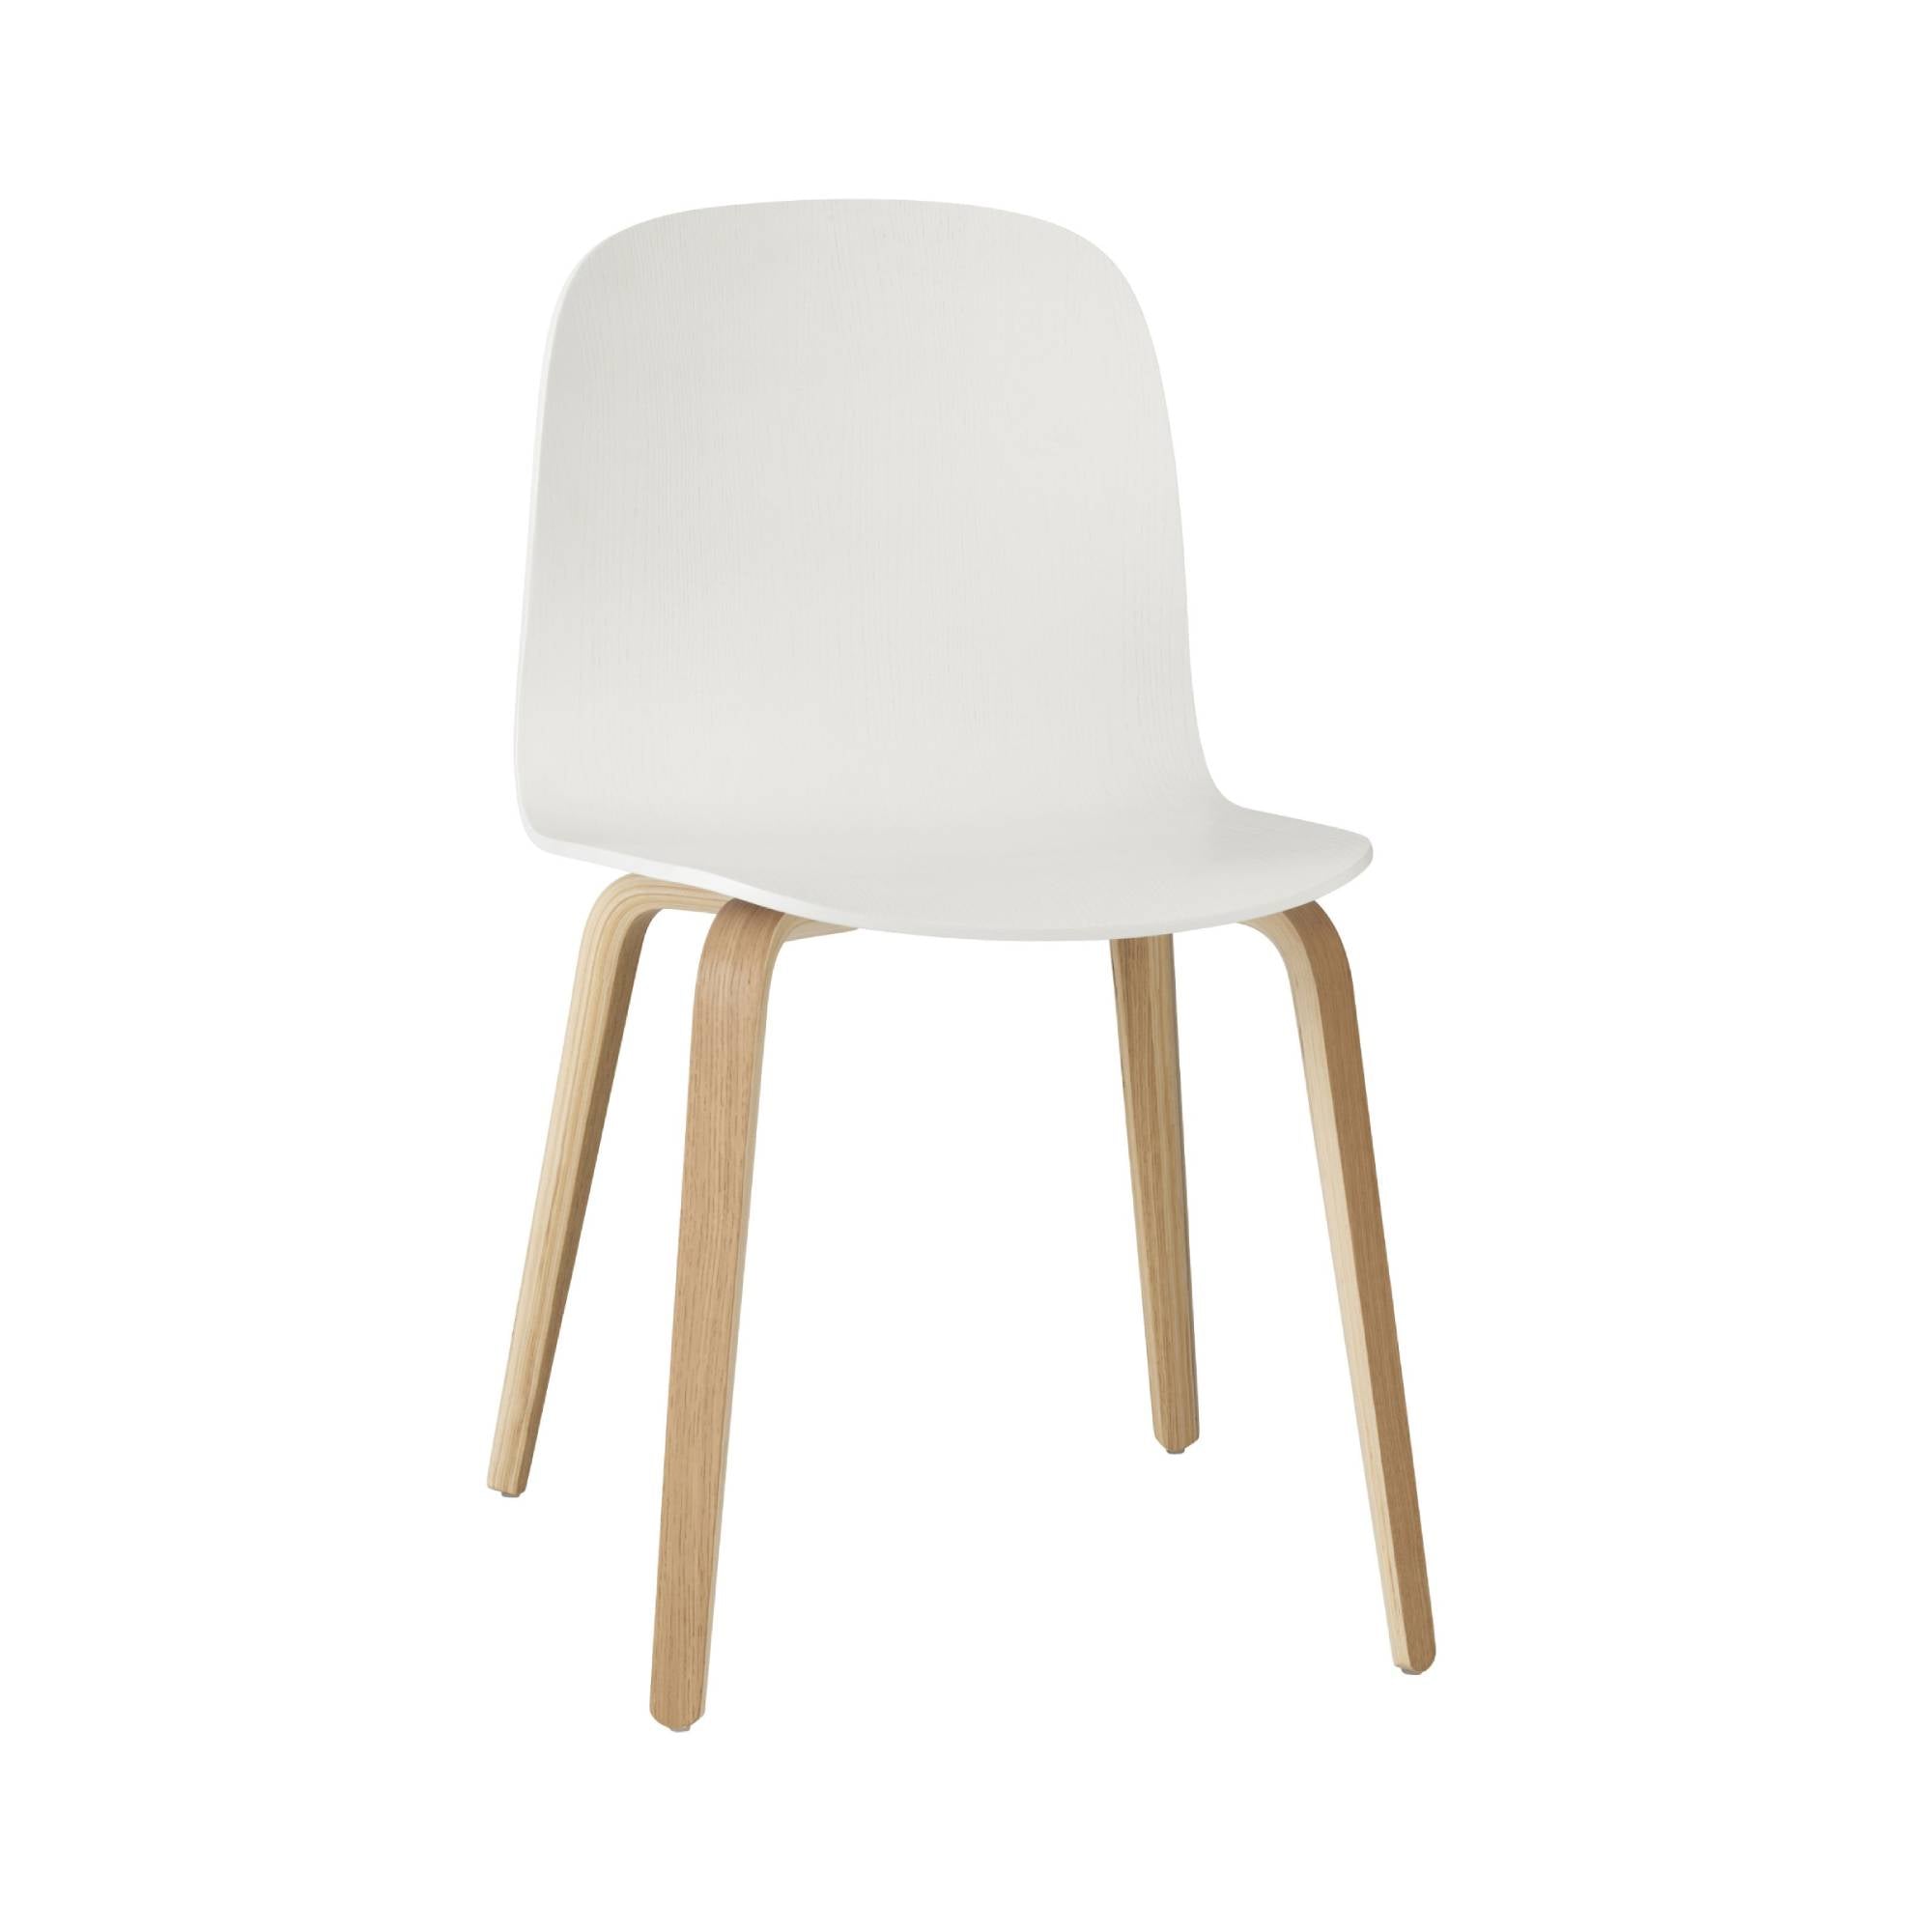 Visu Chair: Wood Base + White +Oak